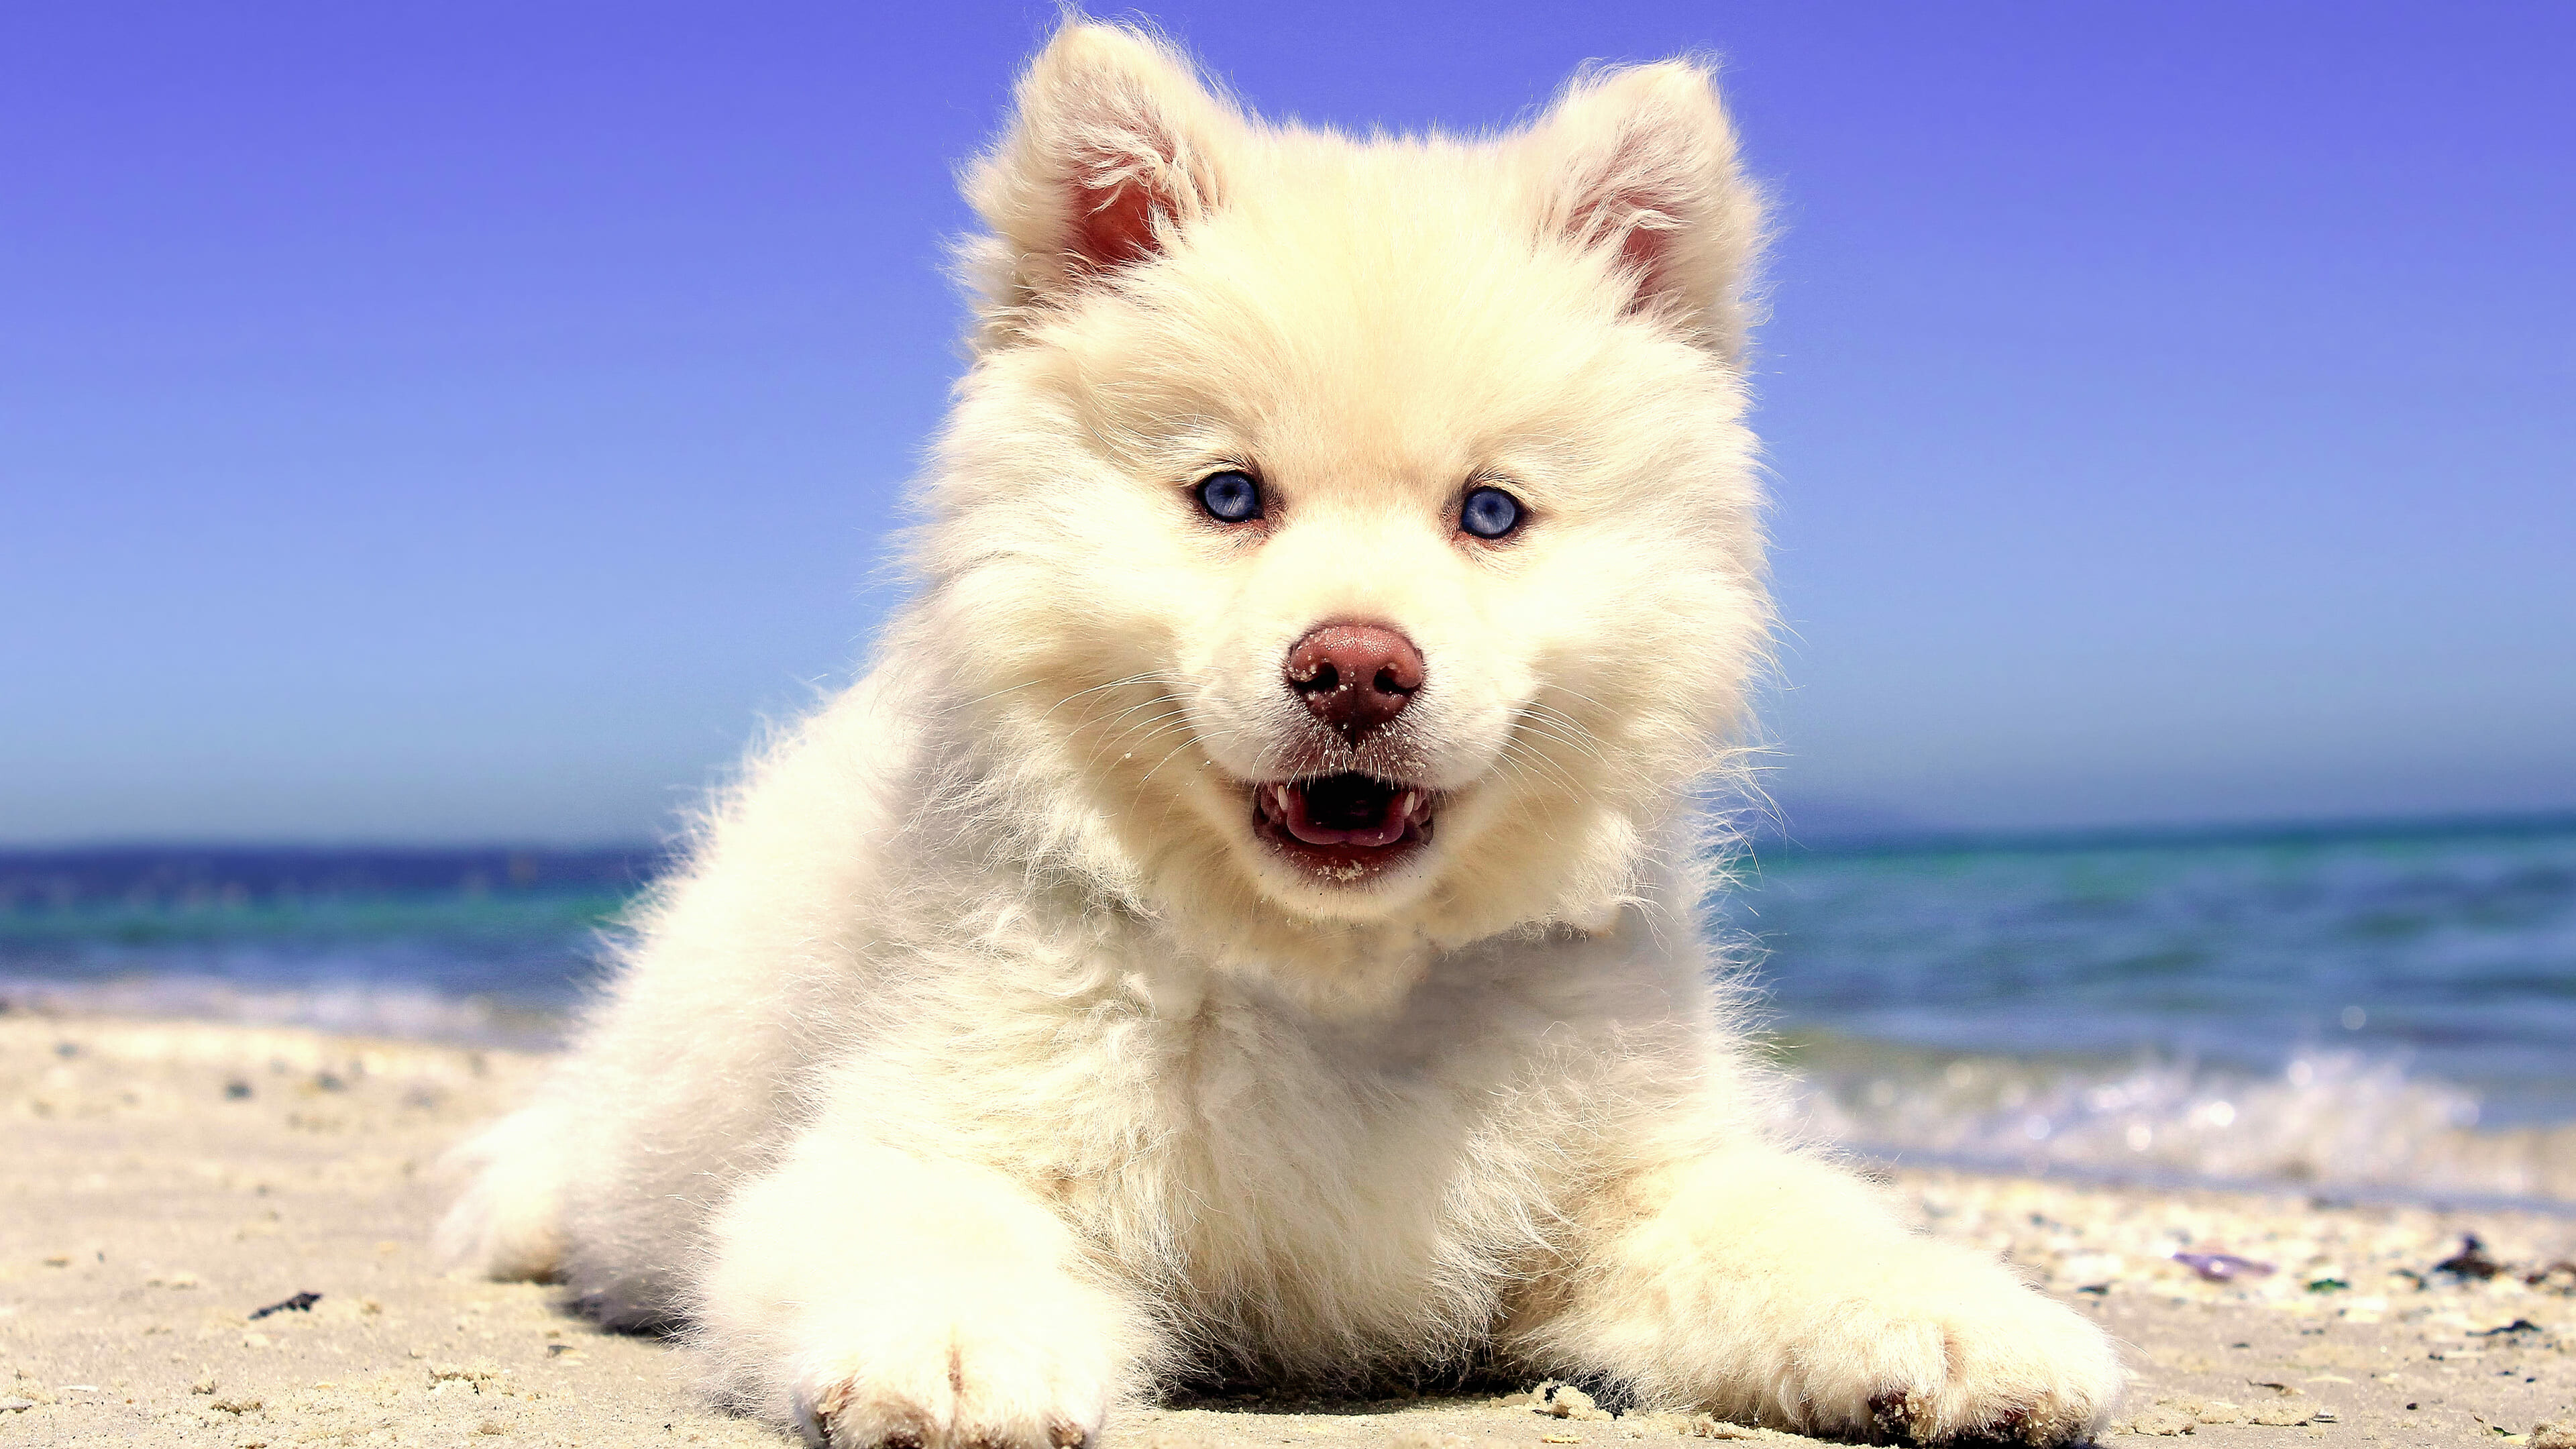 Puppy: The Samoyed, Dog breed, A juvenile dog. 3840x2160 4K Wallpaper.